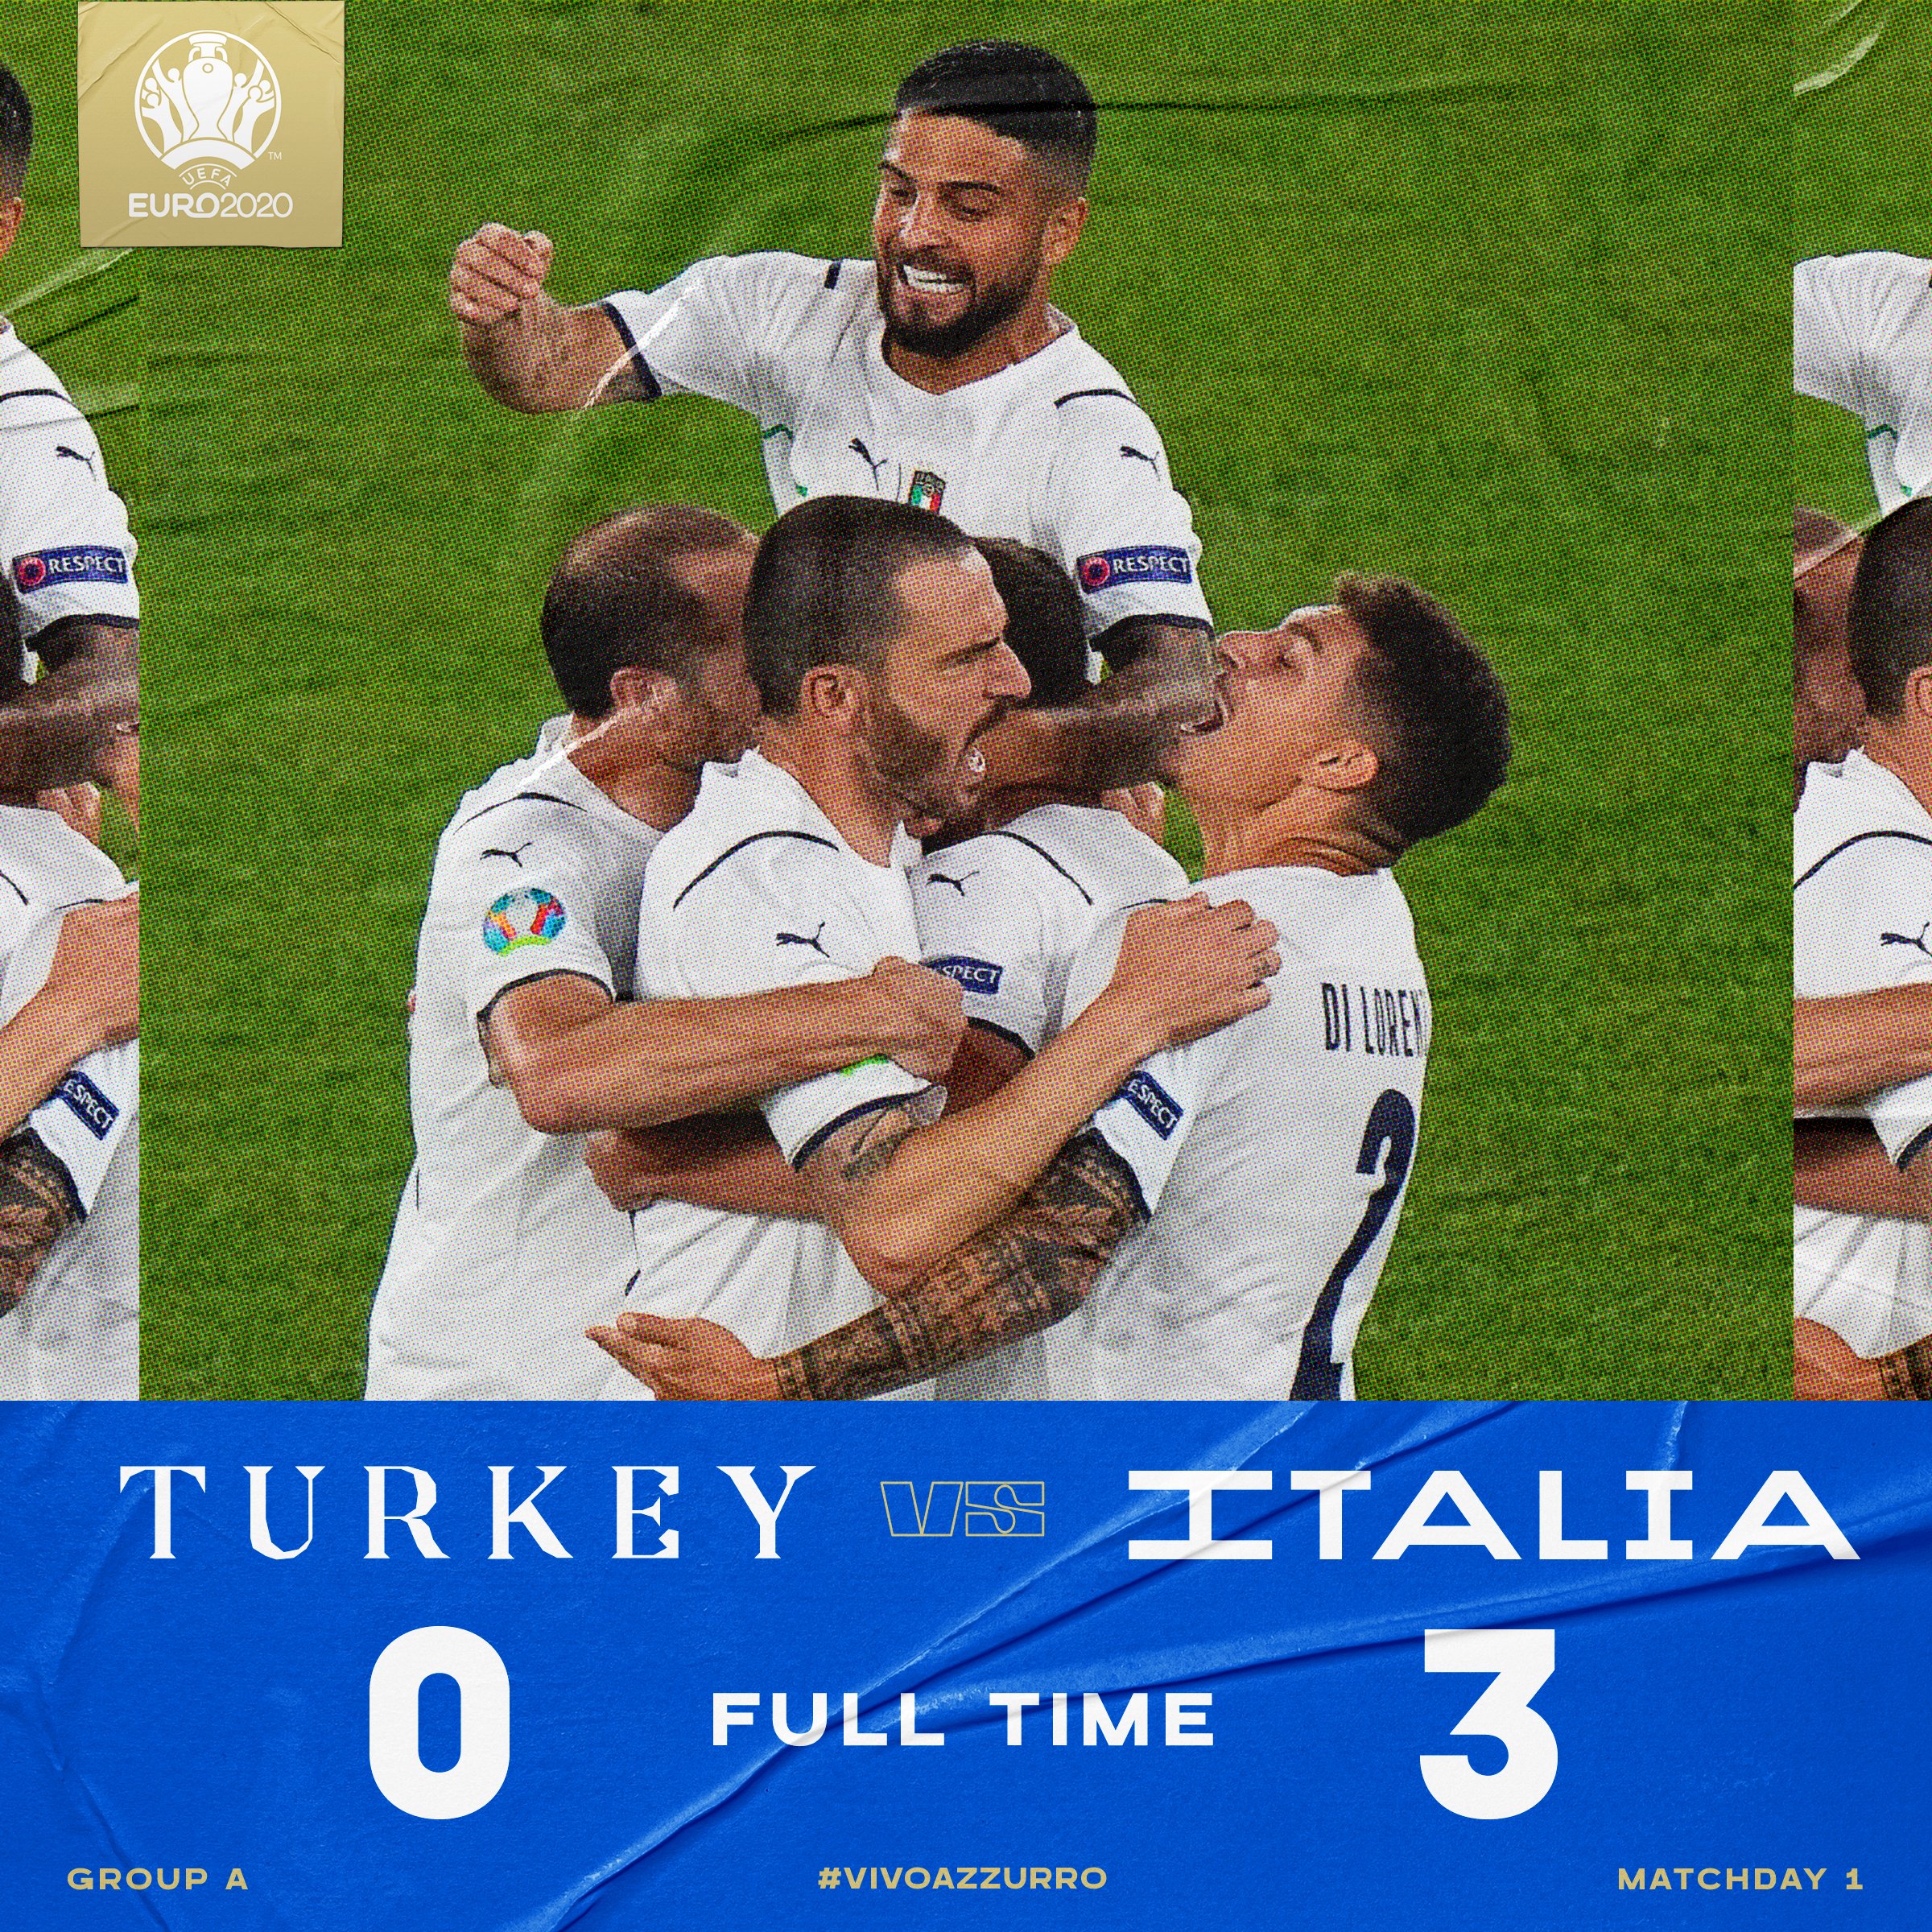 Italy defeats Turkey 3-0 in Euro 2020 opener in Rome.